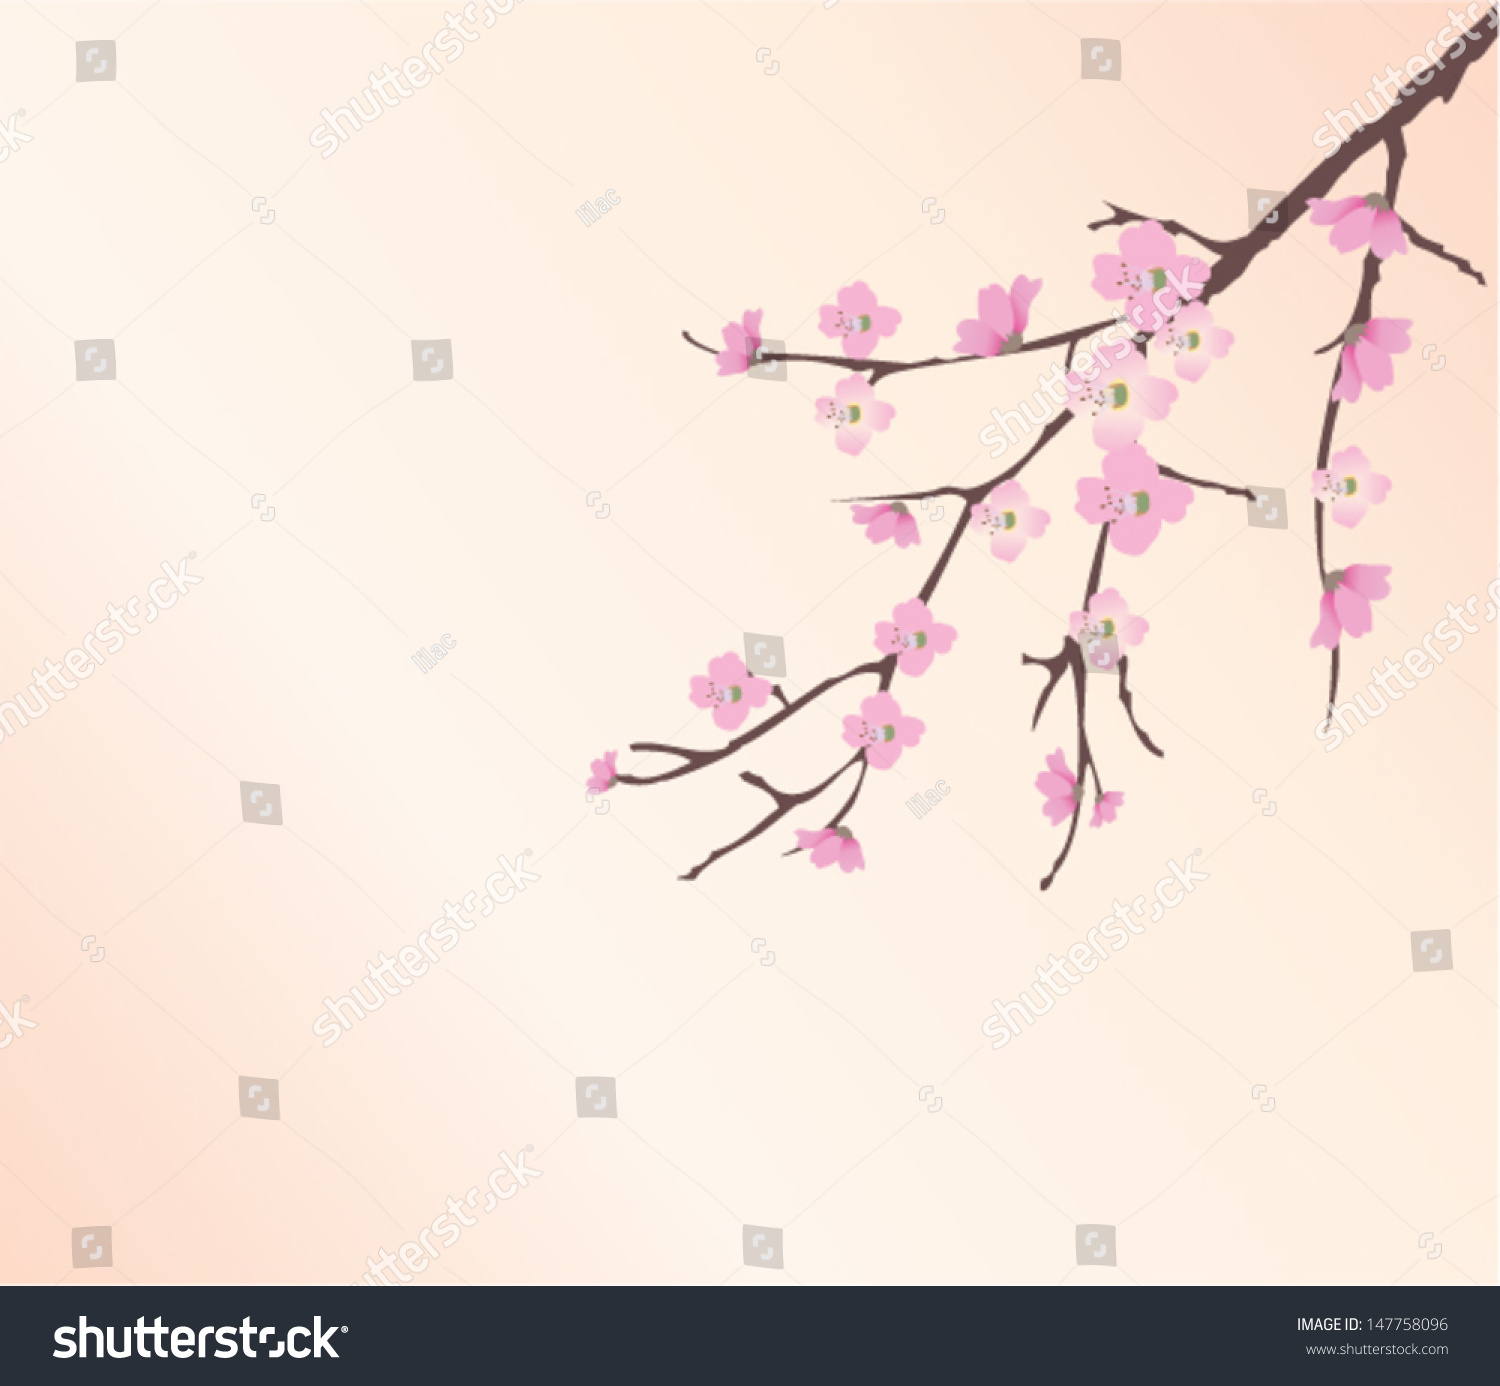 Vector Cherry Tree Branch In Blossom - 147758096 : Shutterstock